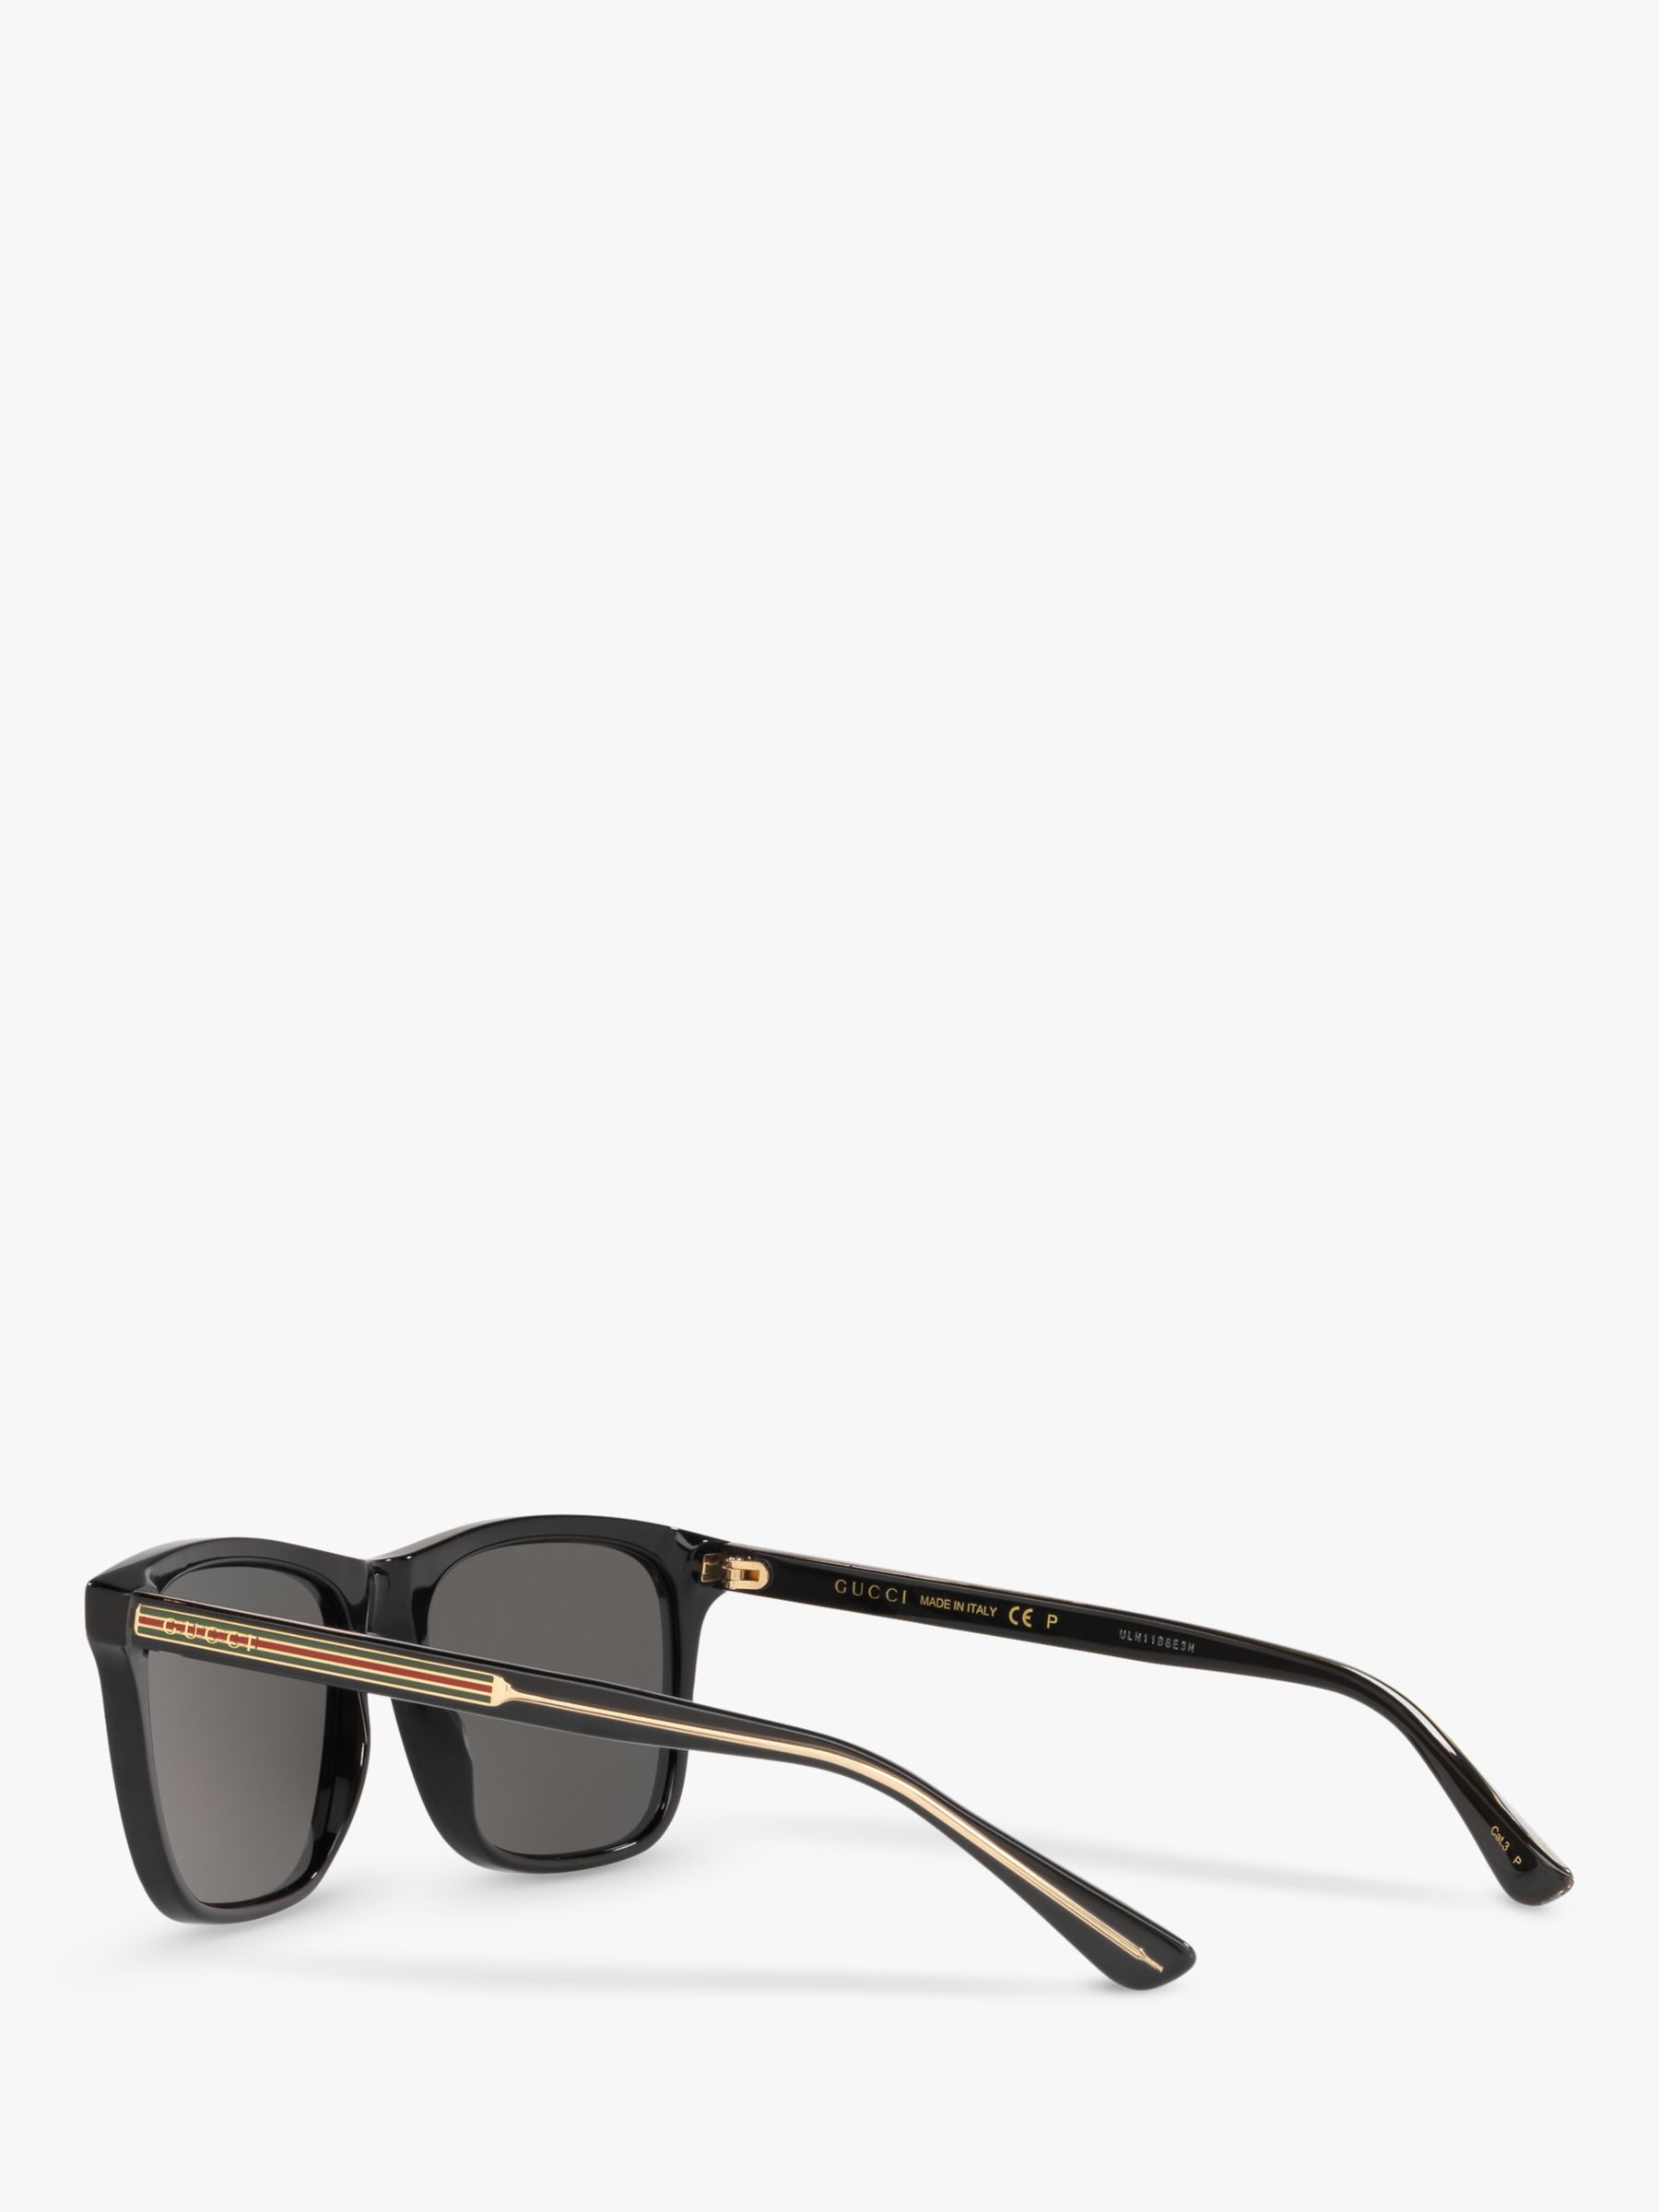 Gucci GG0381SN Men's Rectangular Sunglasses, Black/Grey at John Lewis ...